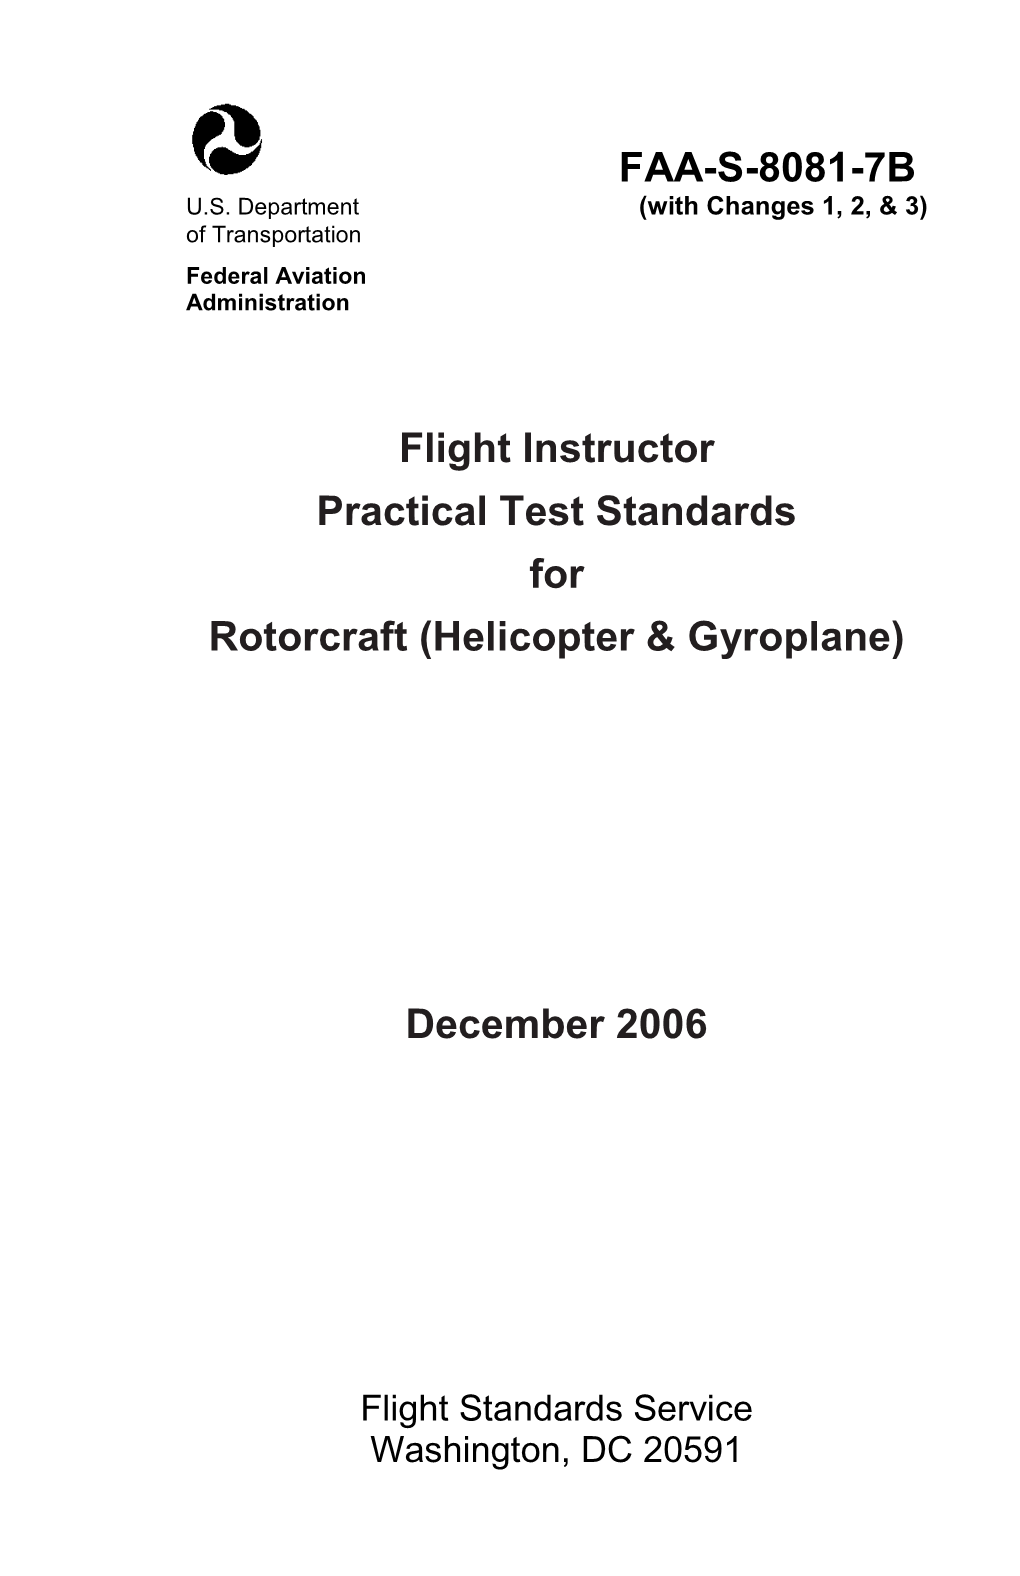 Flight Instructor Practical Test Standards for Rotorcraft (Helicopter & Gyroplane)